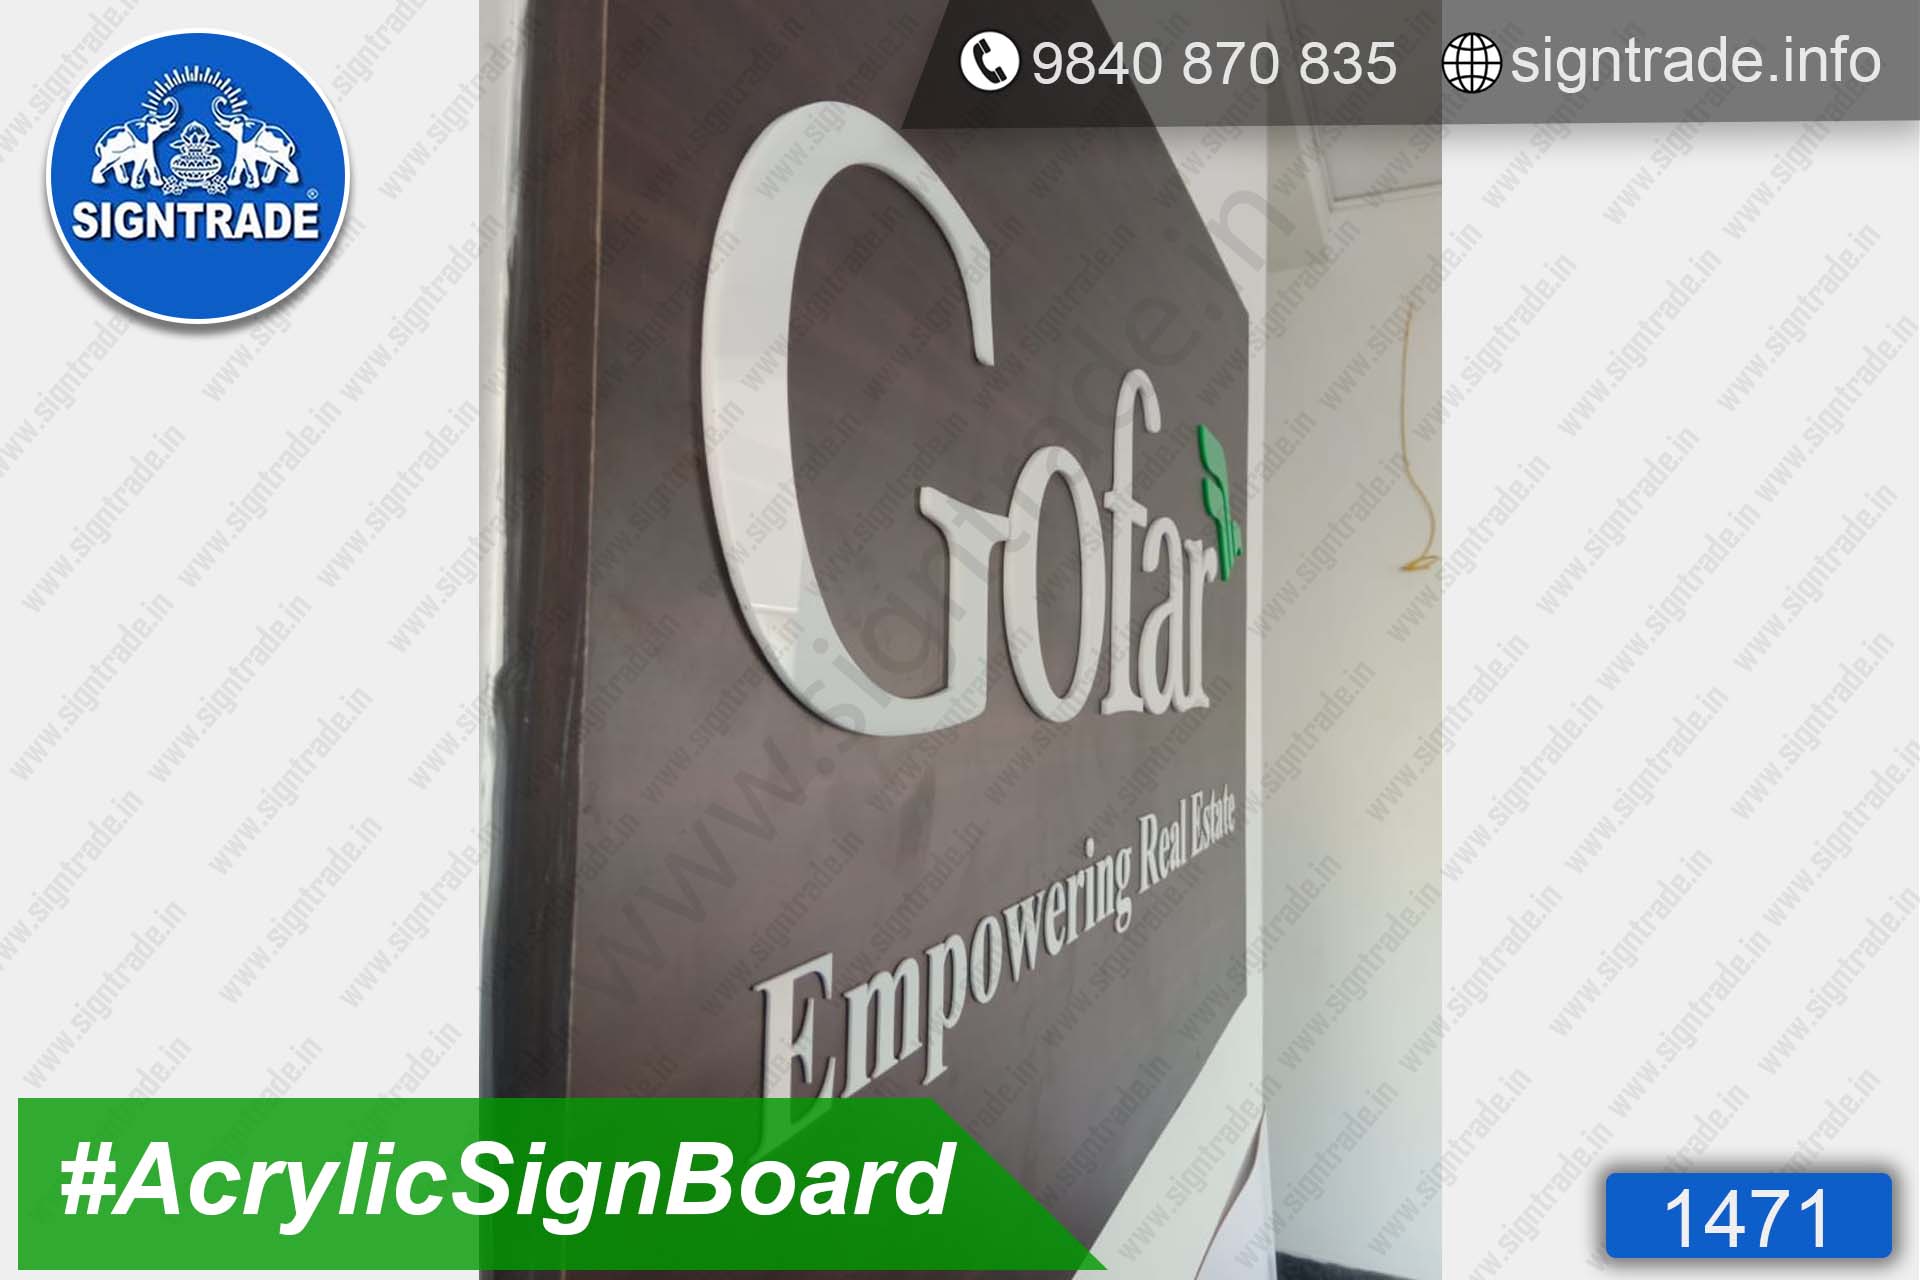 Gofar Empowering Real Estate - Acrylic Letter Sign Board - SIGNTRADE - Acrylic Letter Sign Board Manufacture in Chennai